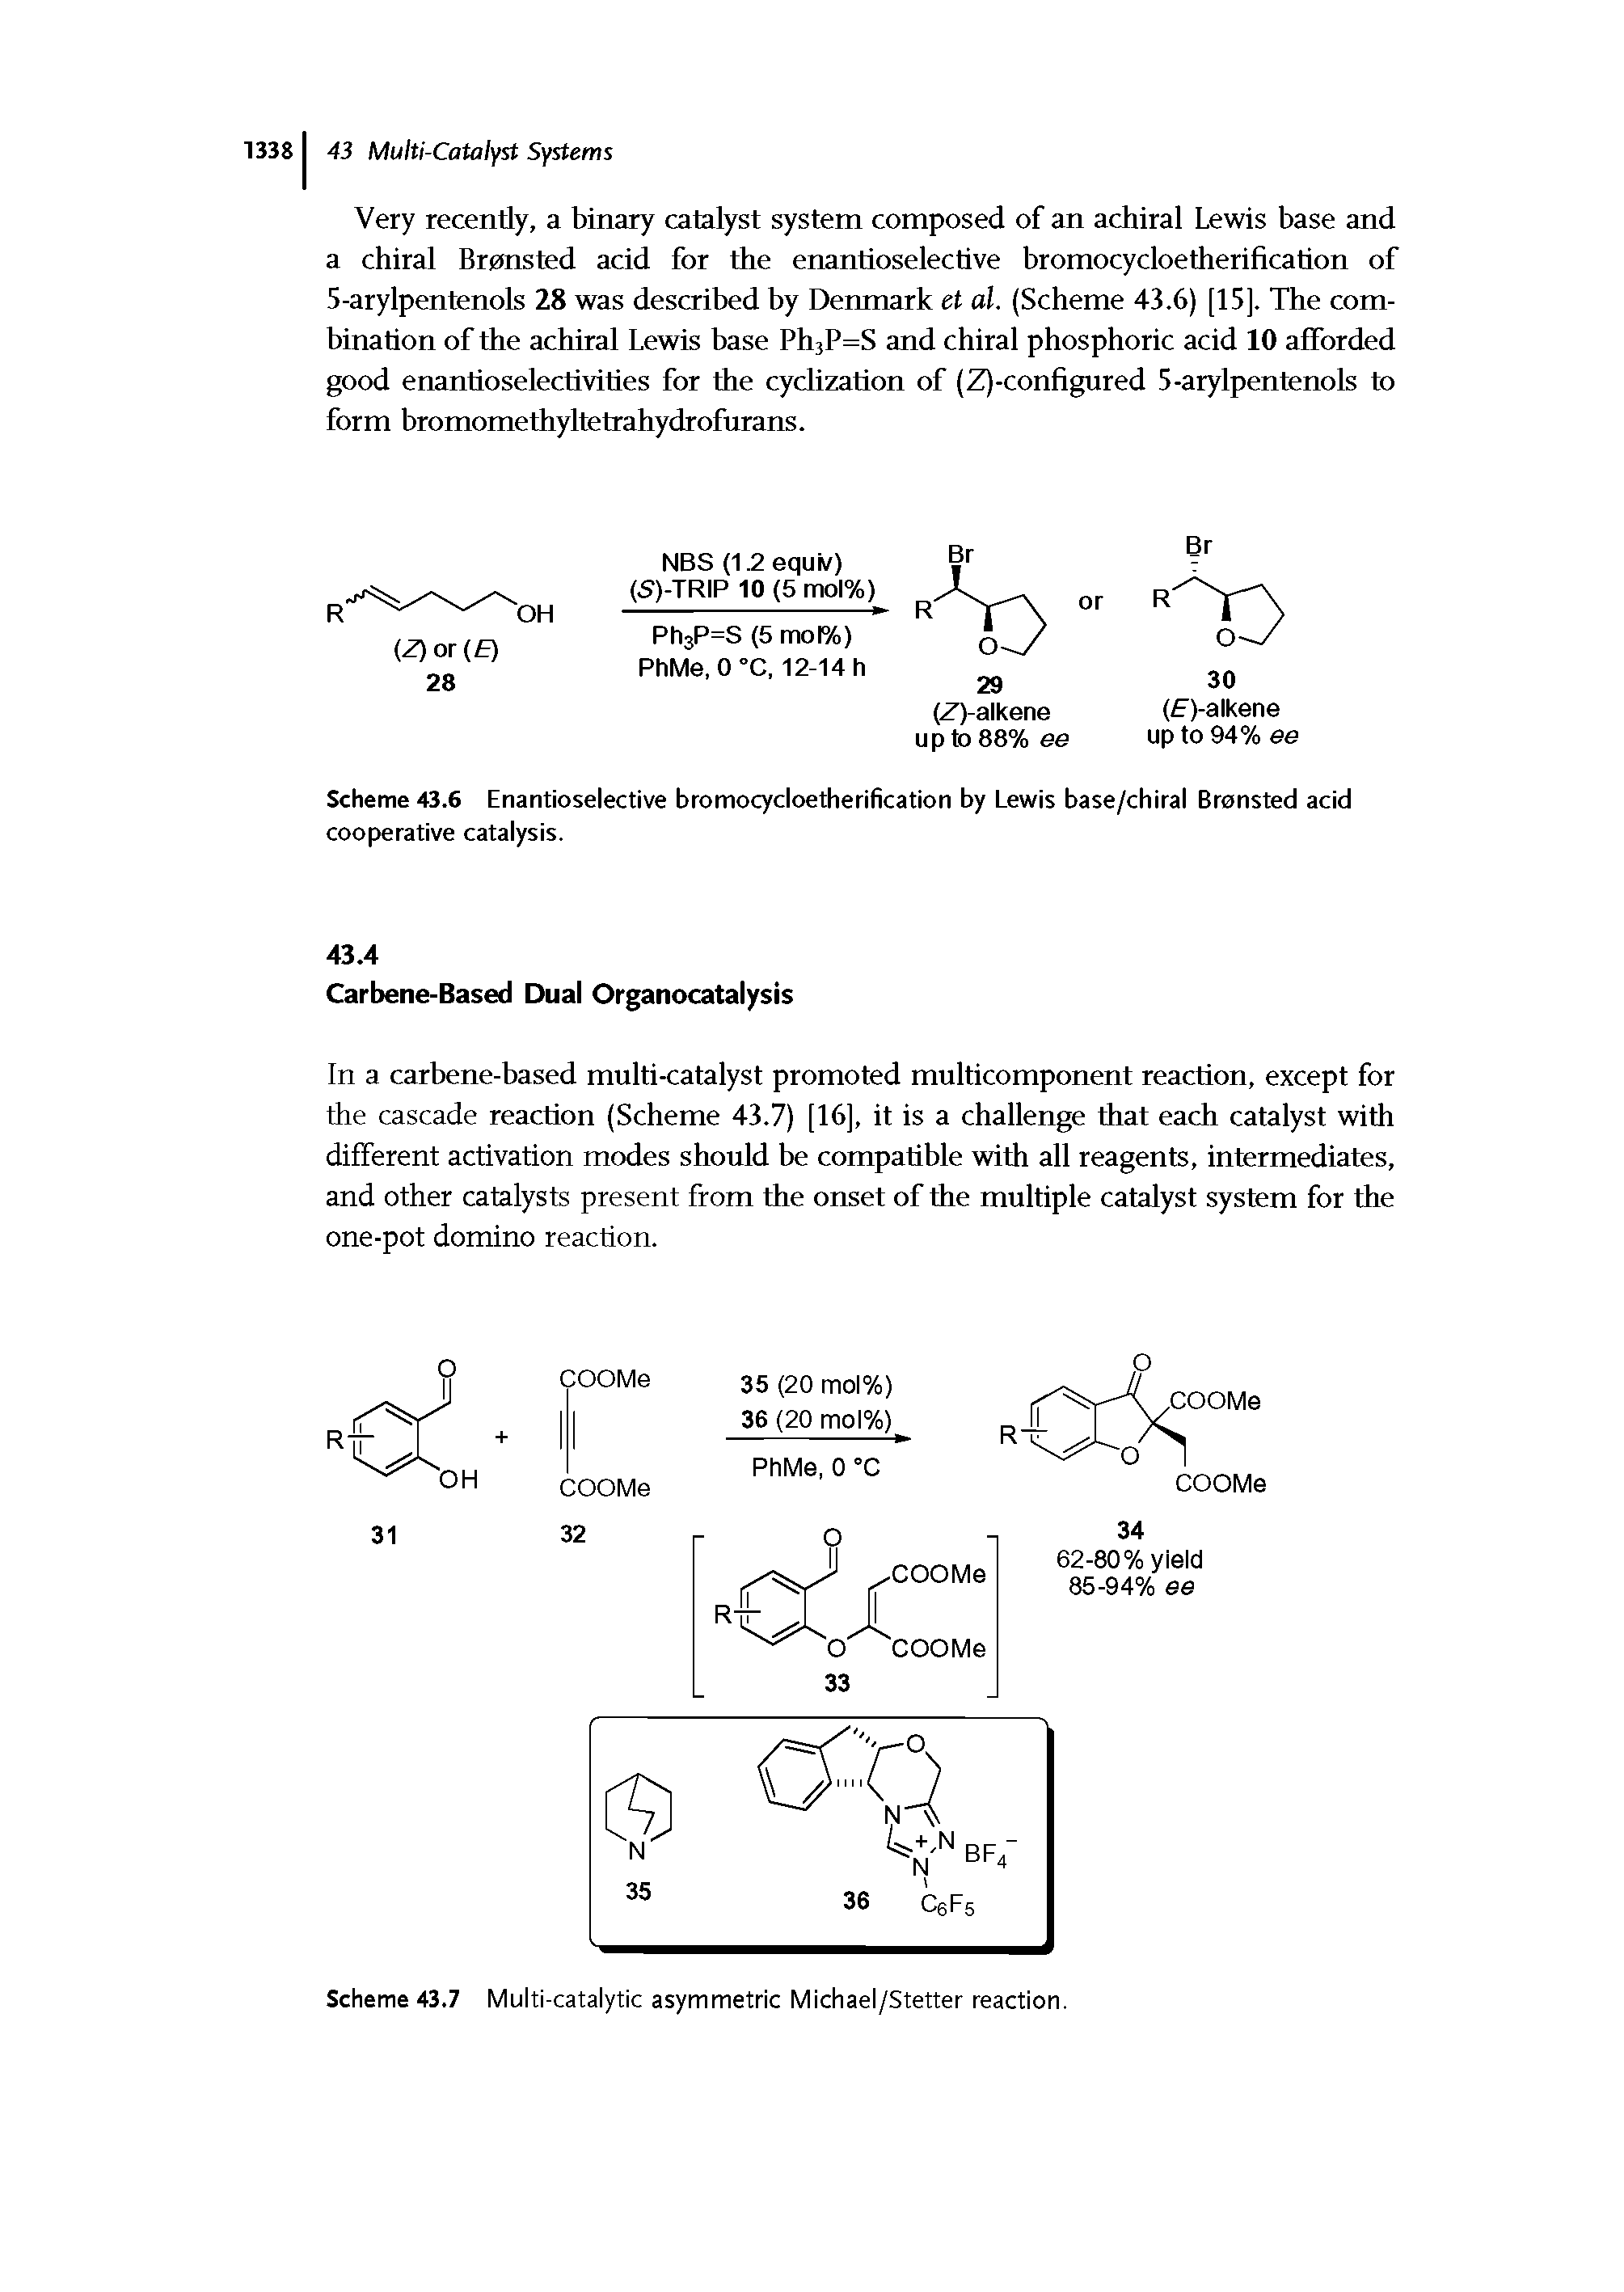 Scheme 43.7 Multi-catalytic asymmetric Michael/Stetter reaction.